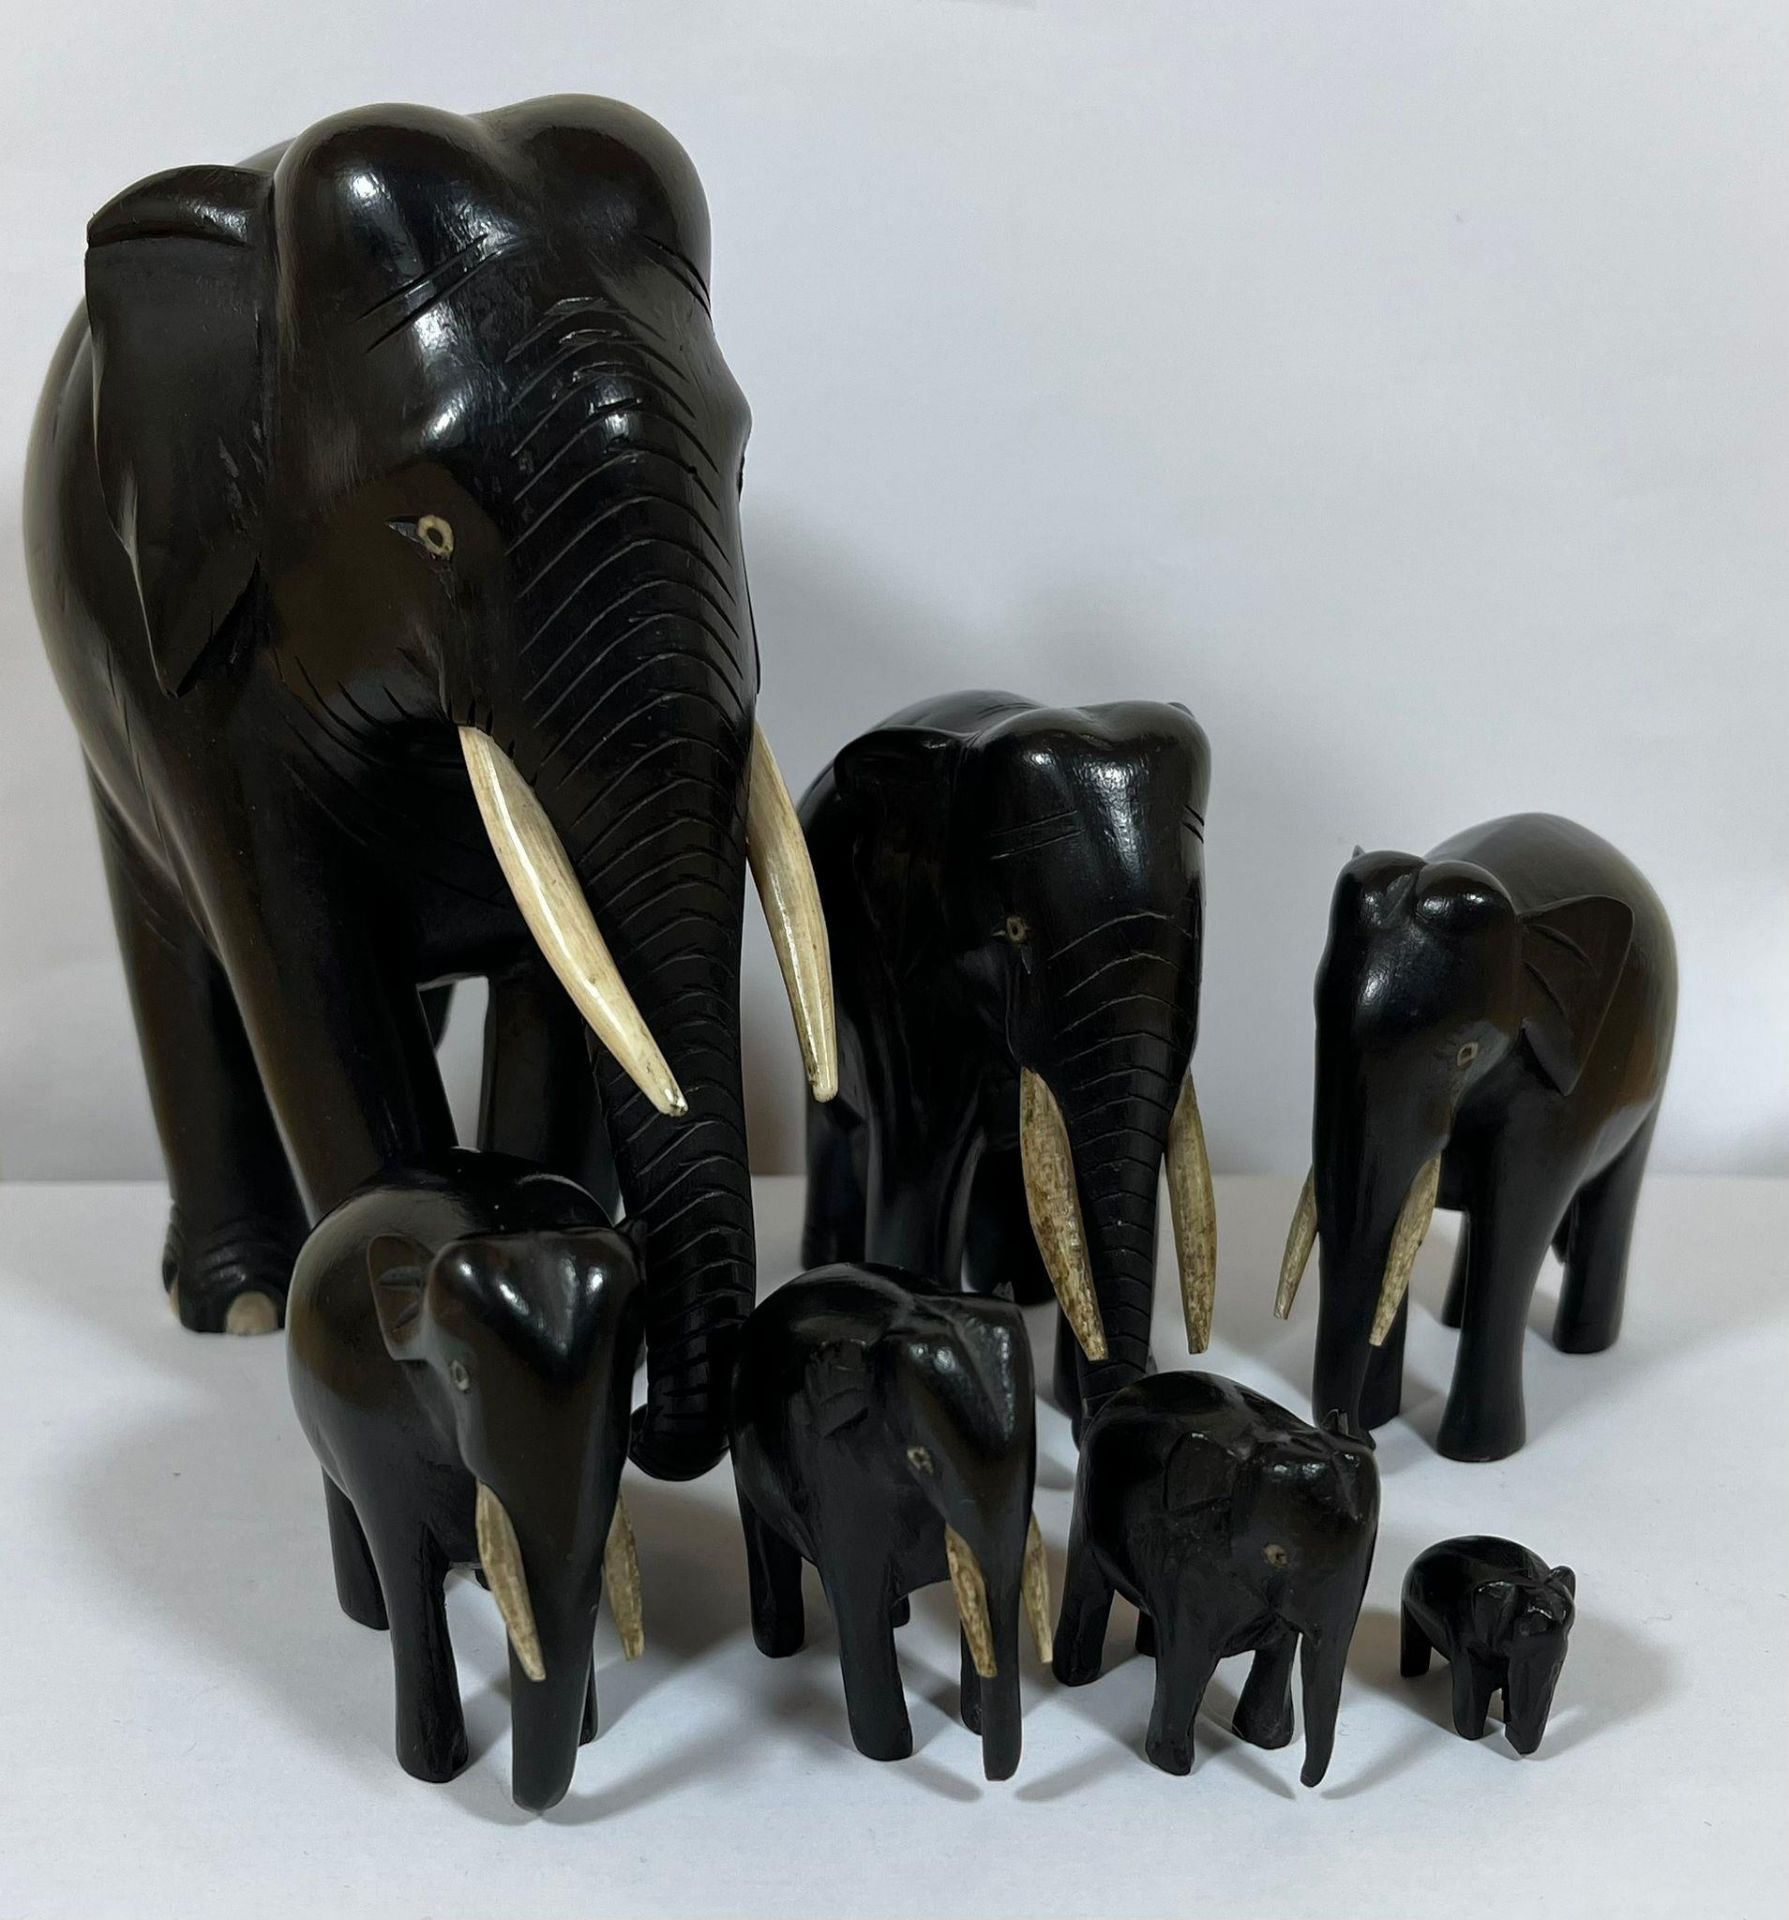 AN ANTIQUE FAMILY OF SEVEN GRADUATED EBONY ELEPHANTS, LARGEST 16CM, SMALLEST 1.5CM